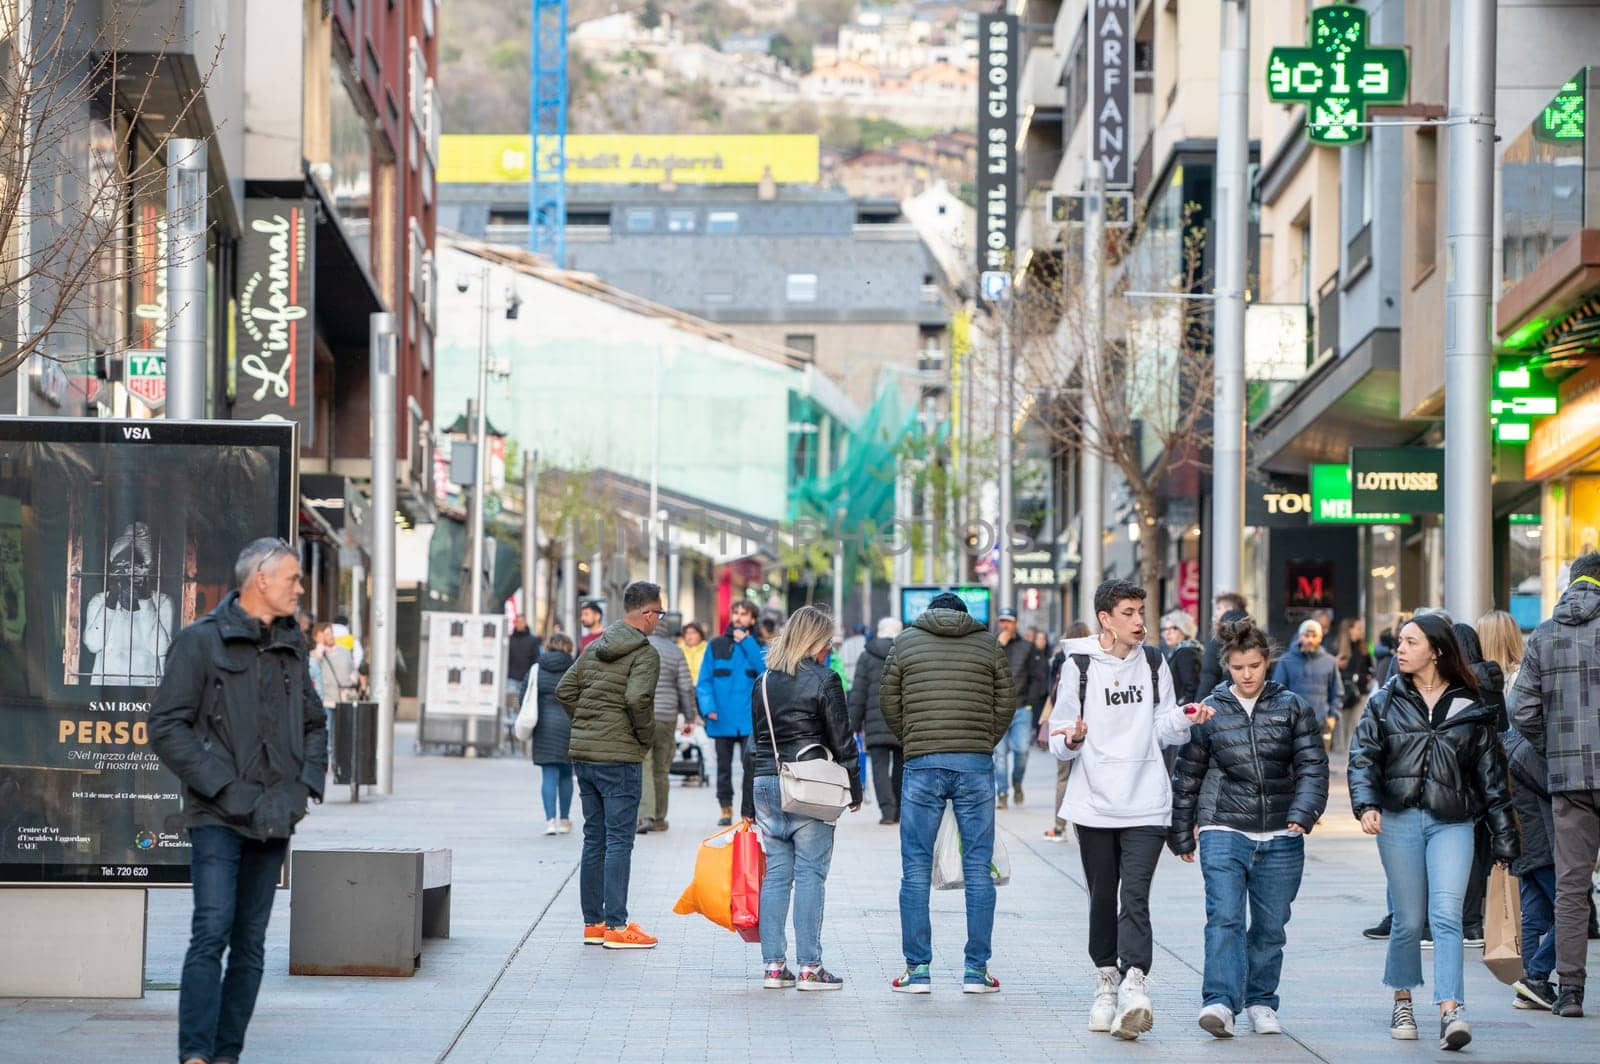 People Walk in the Comercial Street named Meritxell. Andorra la Vella, Andorra in winter. by martinscphoto